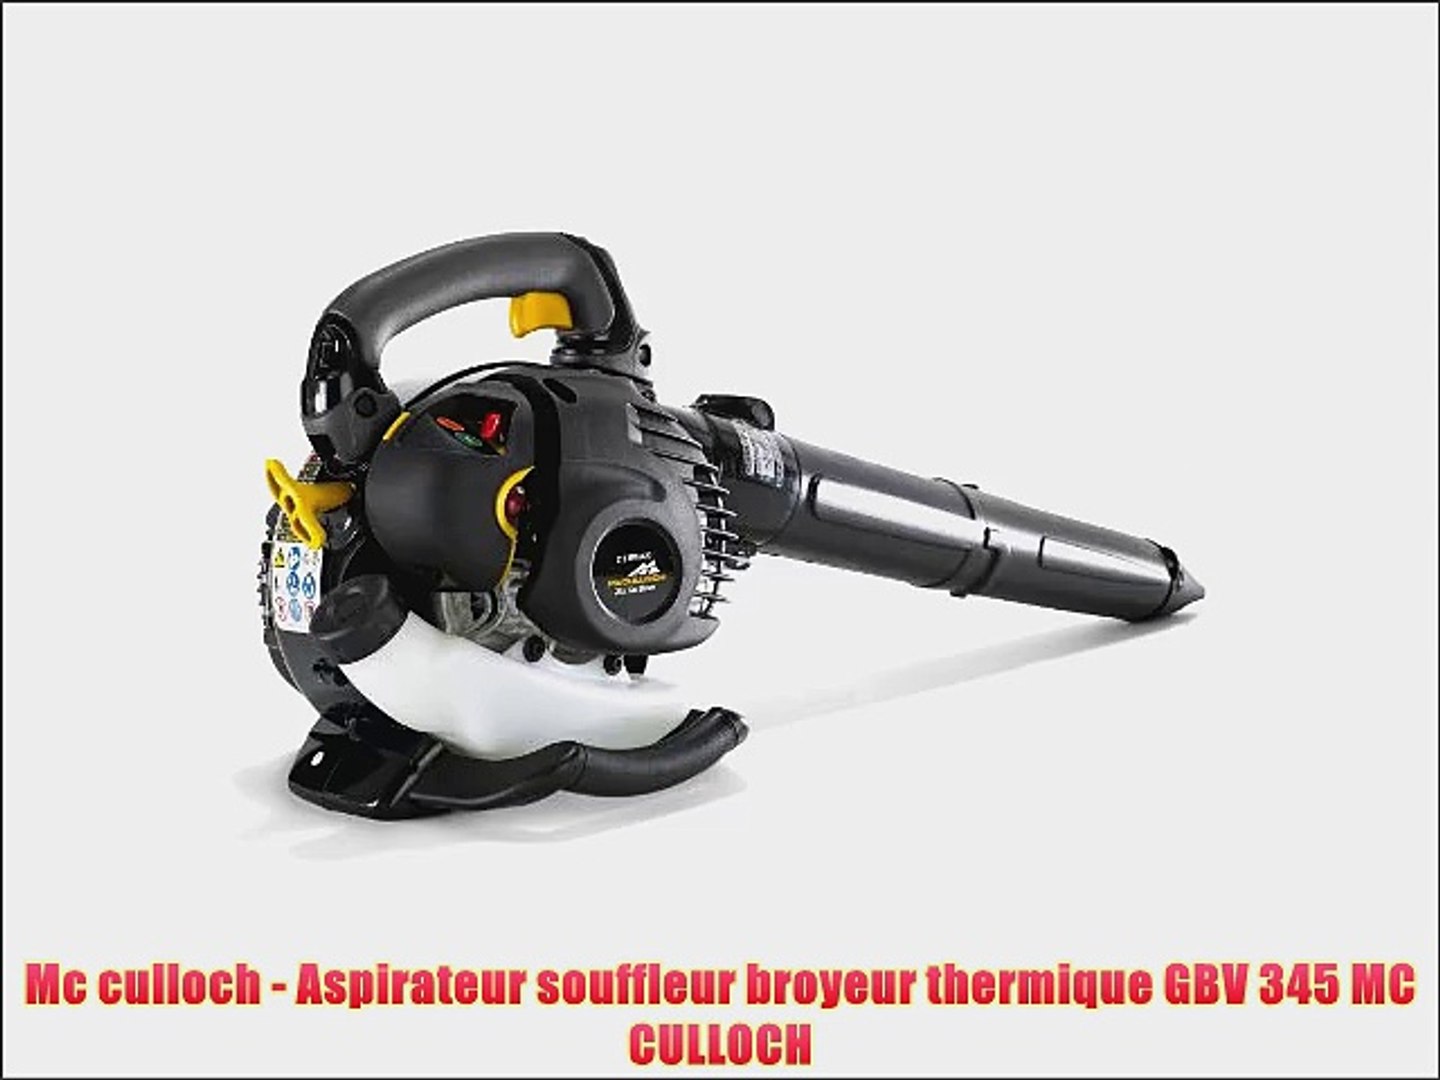 Mc culloch - Aspirateur souffleur broyeur thermique GBV 345 MC CULLOCH -  Video Dailymotion